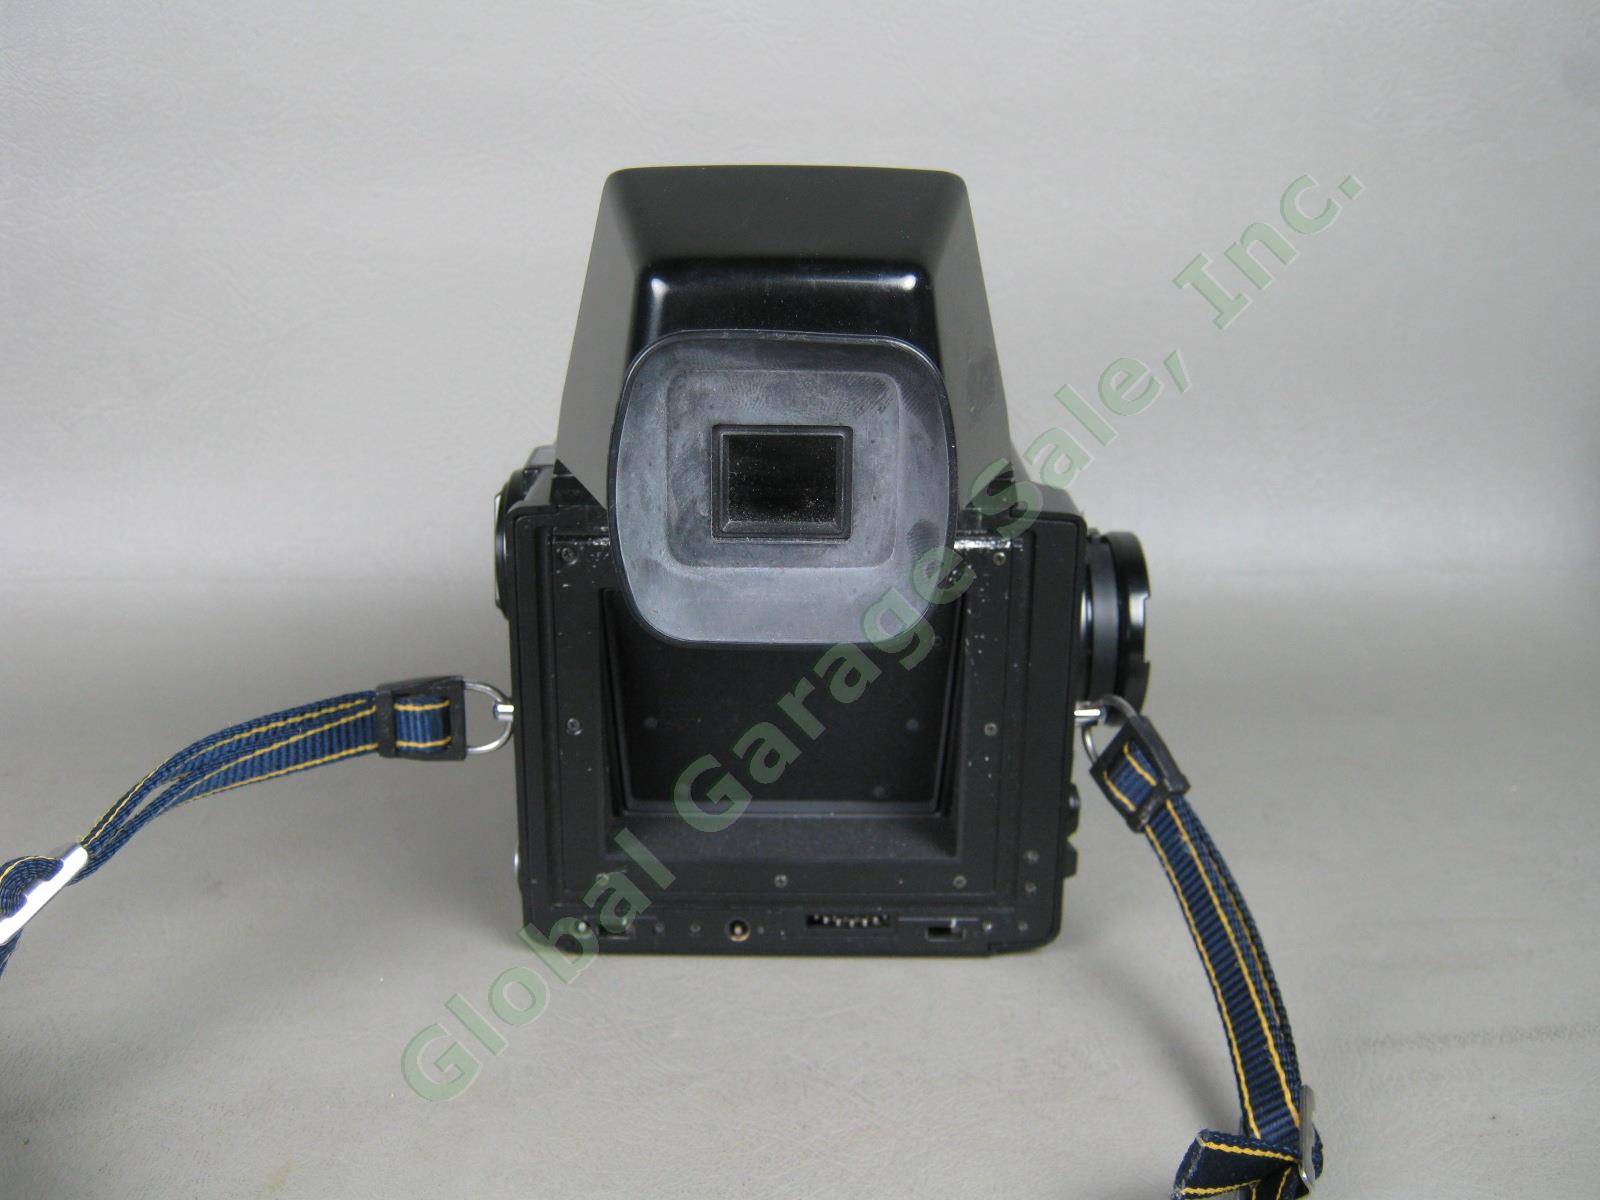 Bronica GS-1 6x7 Medium Format Camera Zenzanon-PG 100mm Lens Backs Grip Bundle 4